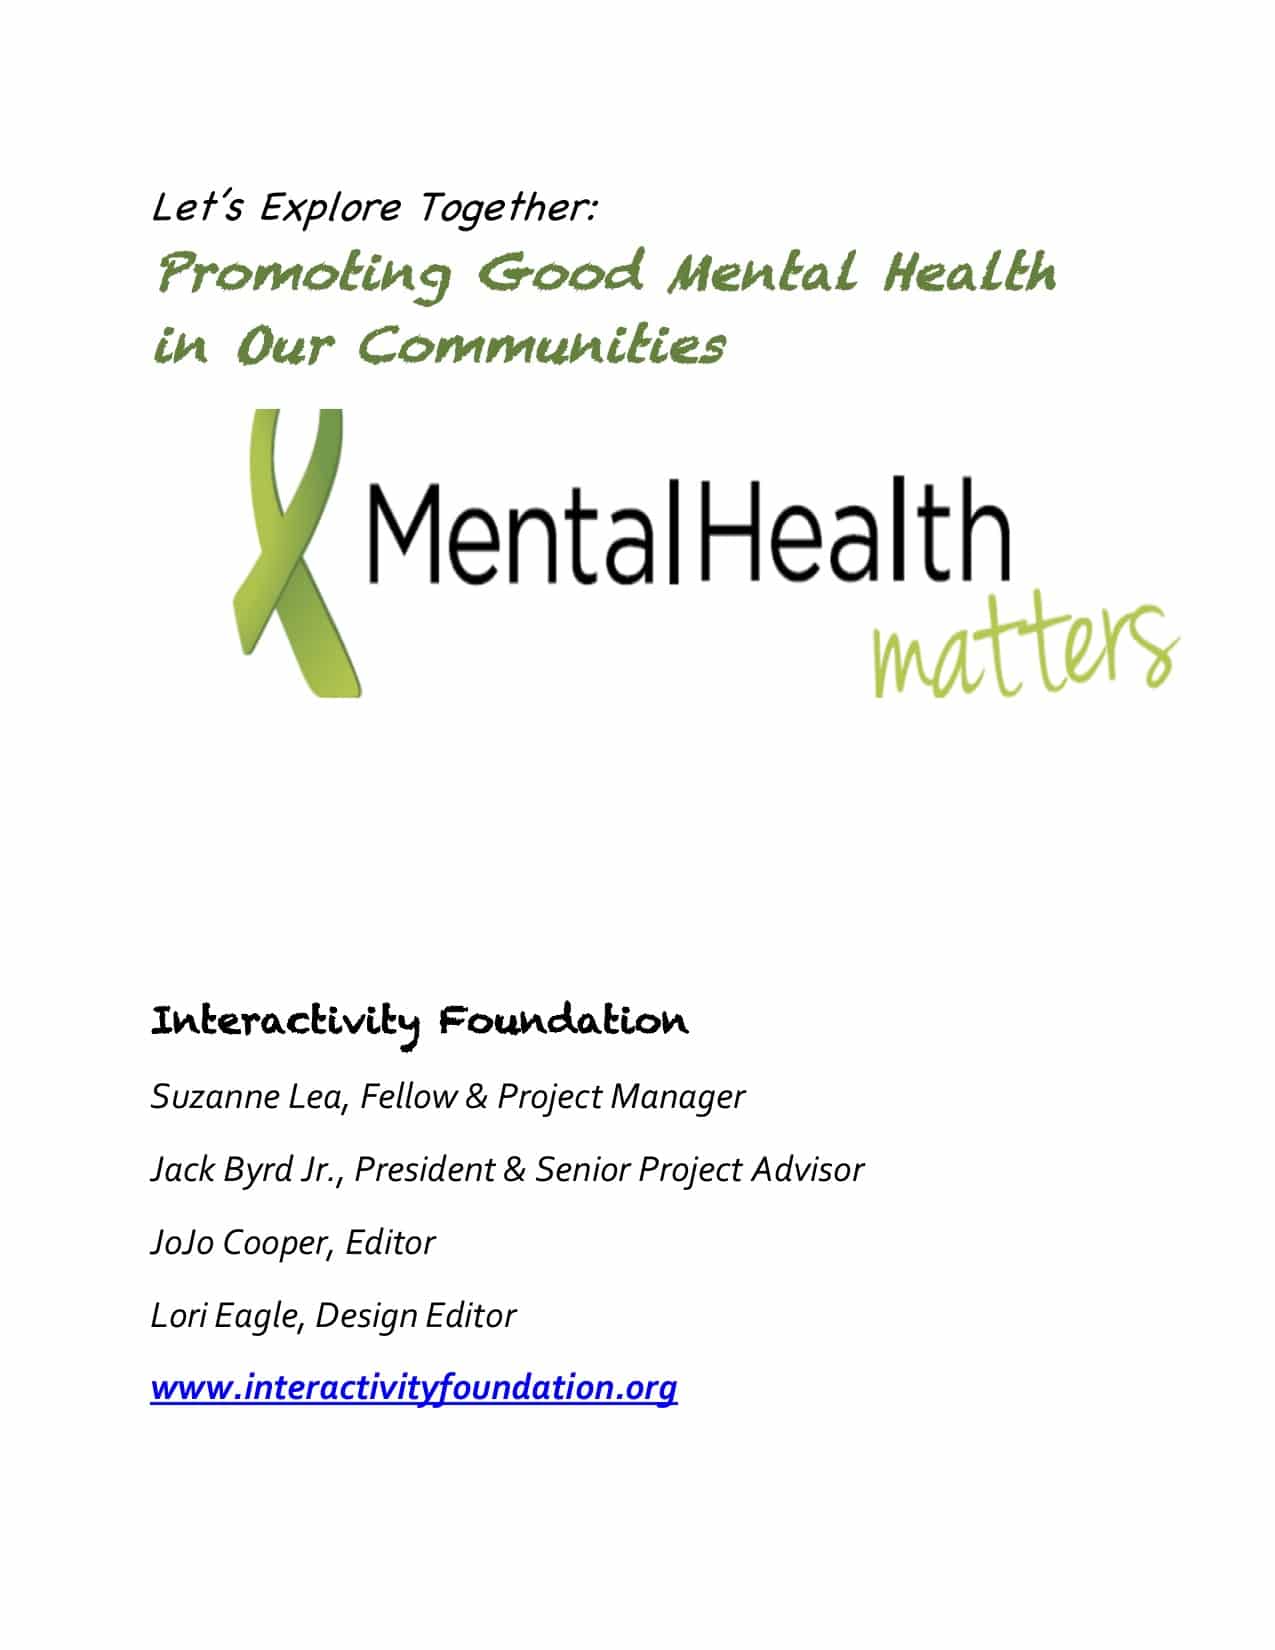 Promoting Good Mental Health in Communities